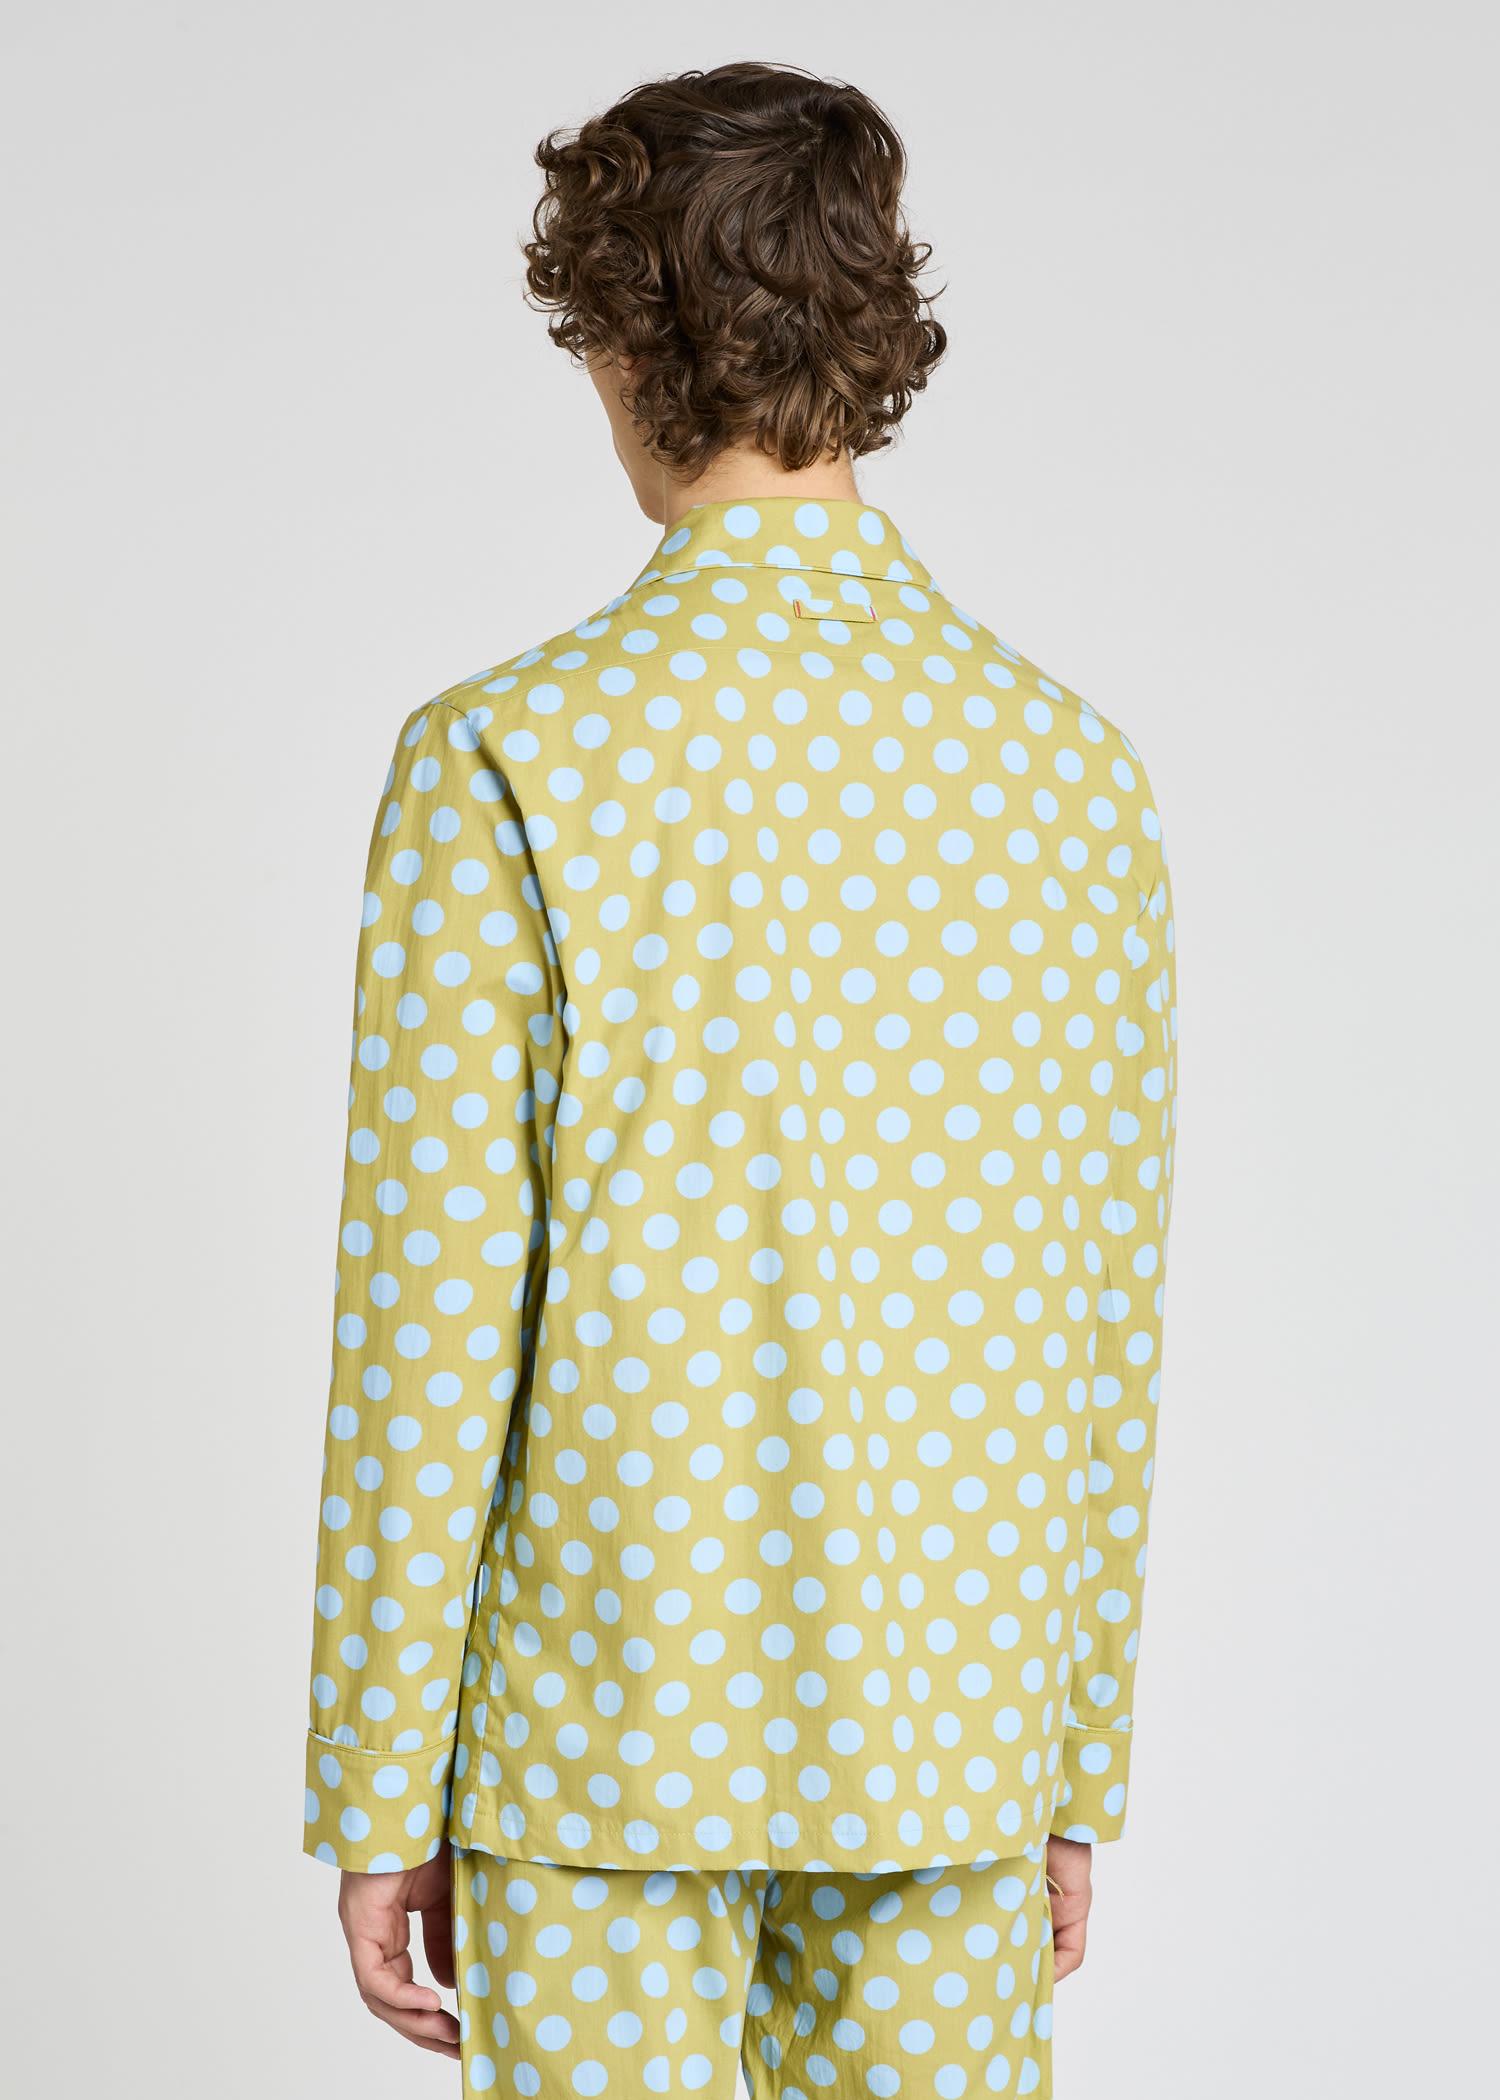 Paul Smith Unisex Green Polka Dot Cotton Pyjama Top in Yellow | Lyst